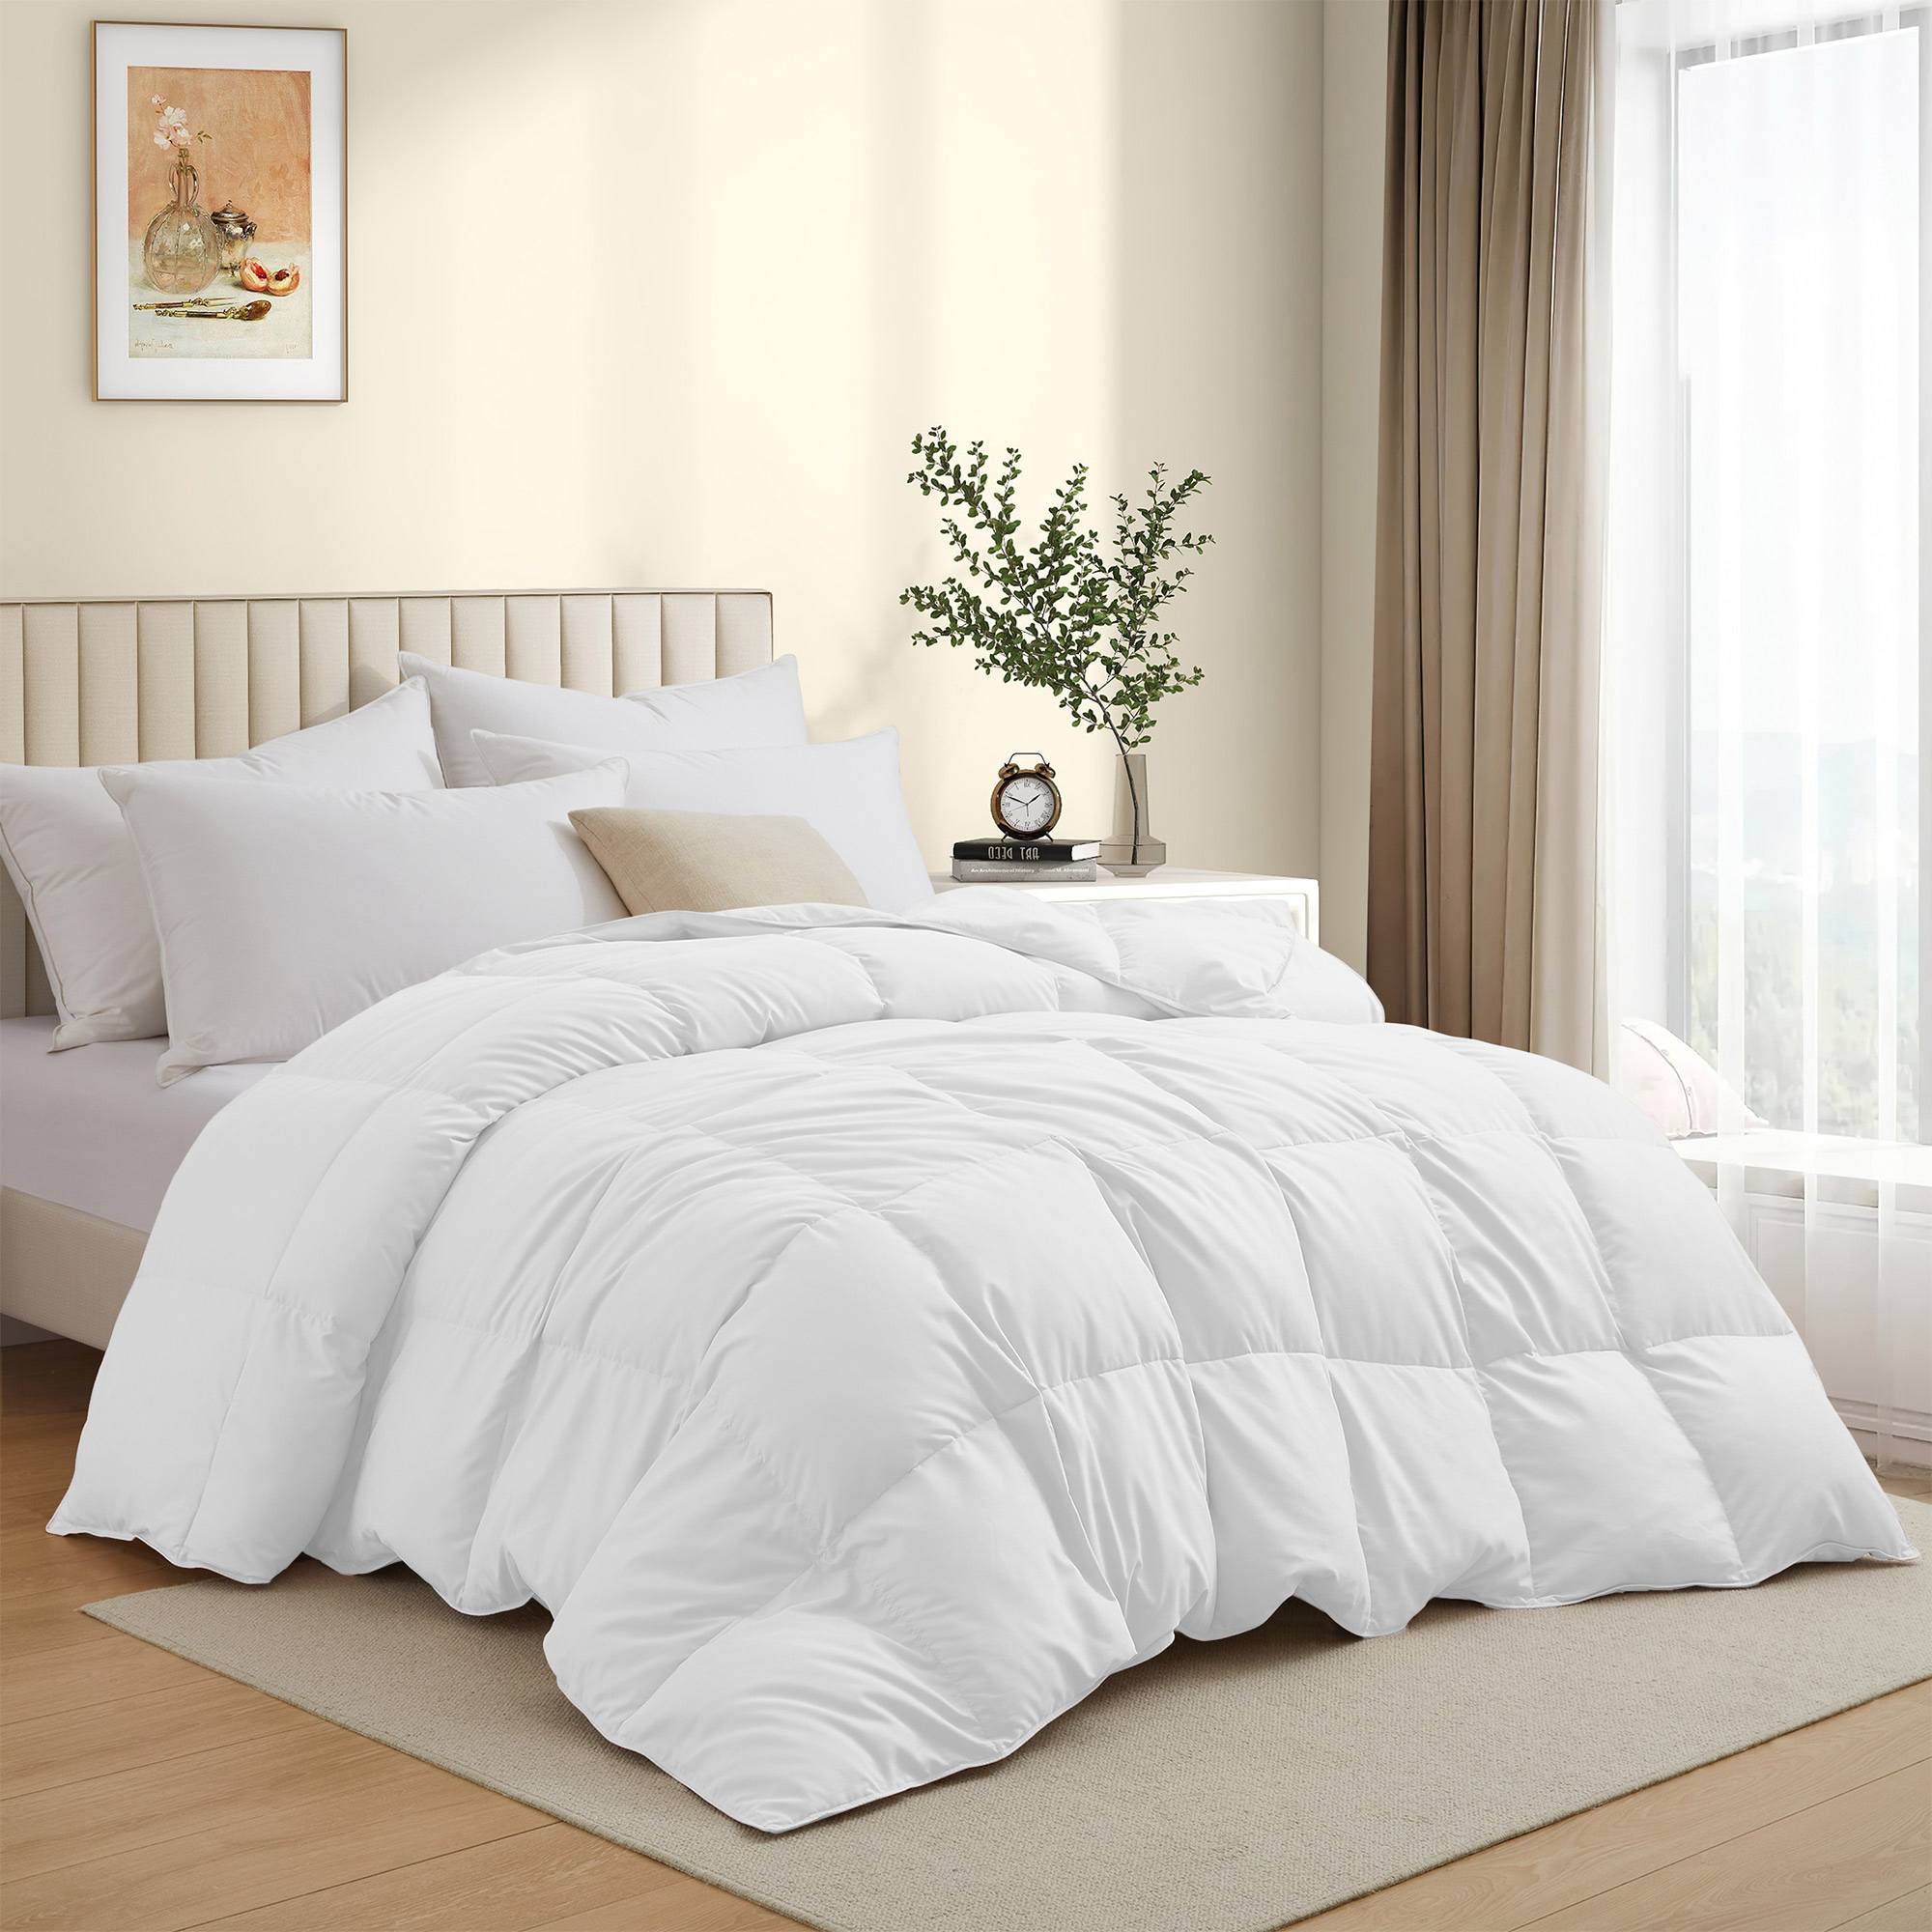 Basic Bedding Sets With All Season Goose Down Feather Comforter, 2 Pack Goose Down Pillows, Duvet Cover Set - White Bundles Option, King Siz